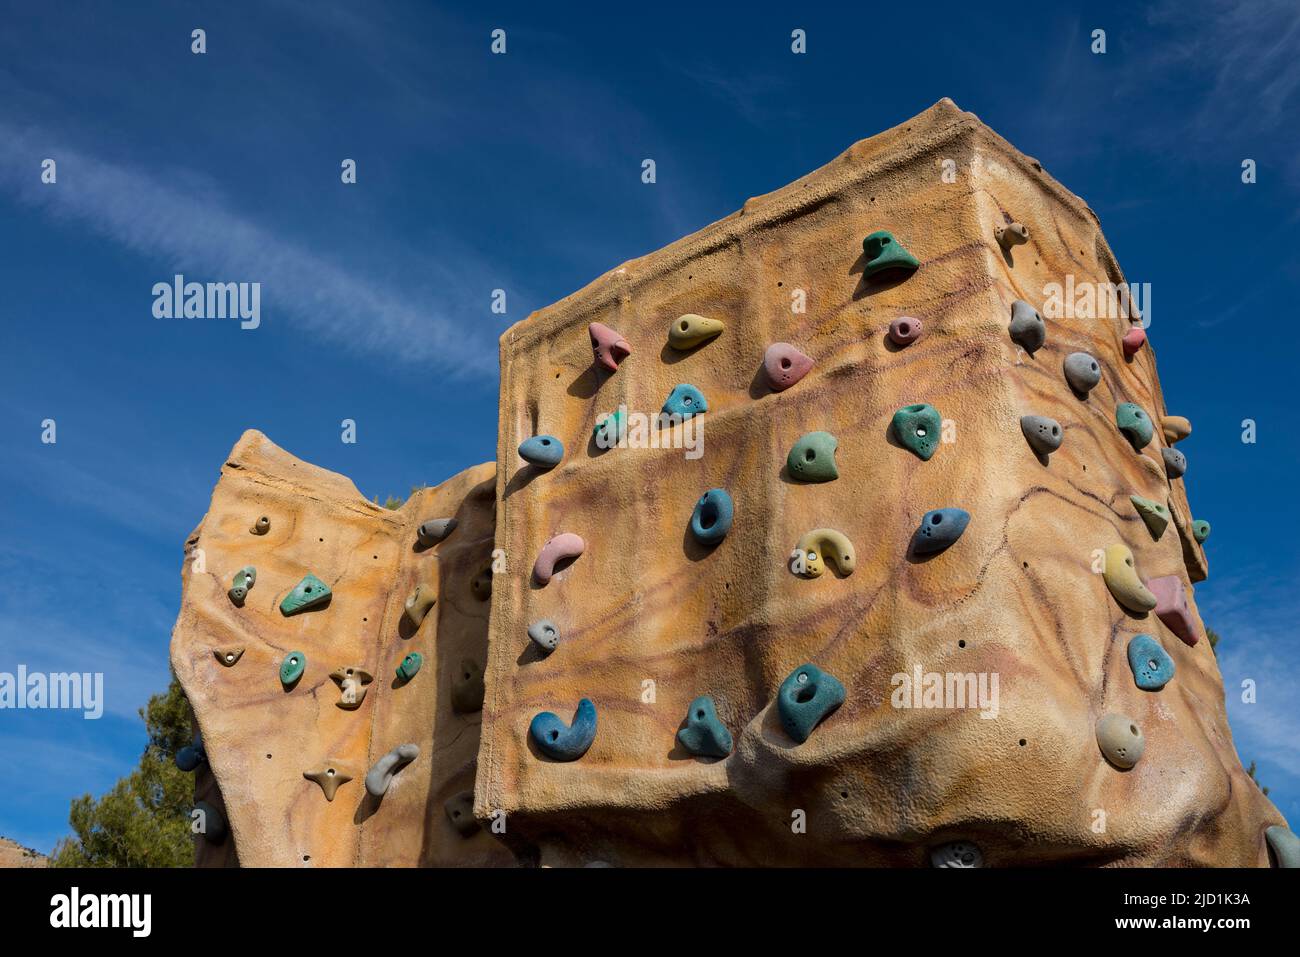 Climbing gym outdoor rock climbing wall pattern. Stock Photo